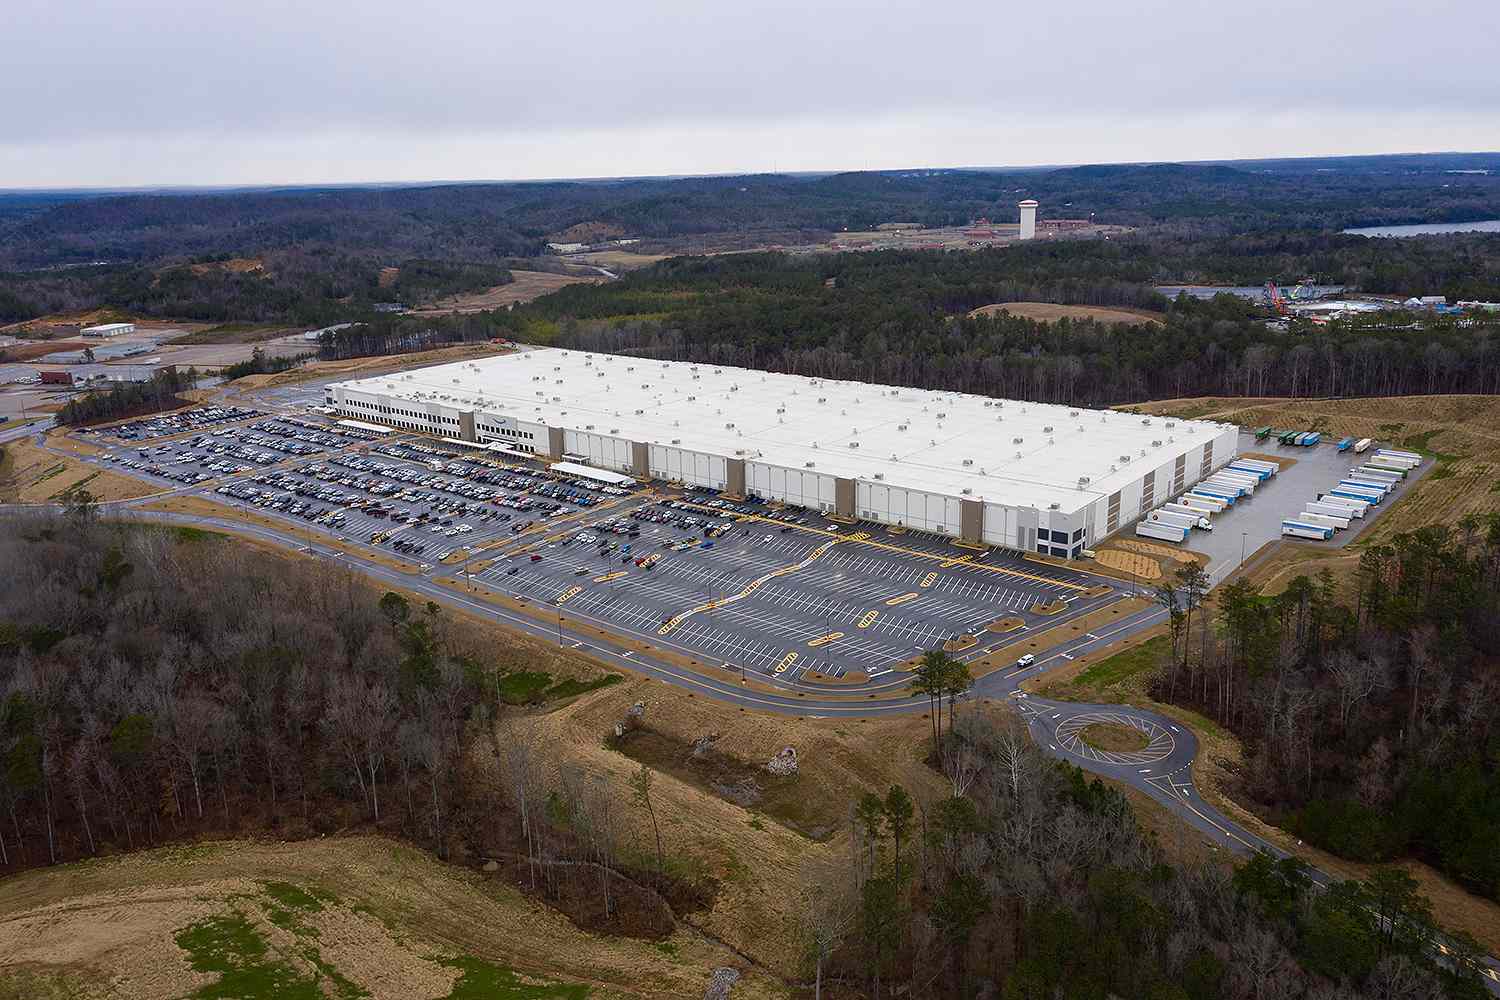 Amazon.com Inc. BHM1 Fulfillment Center in Bessemer, Alabama